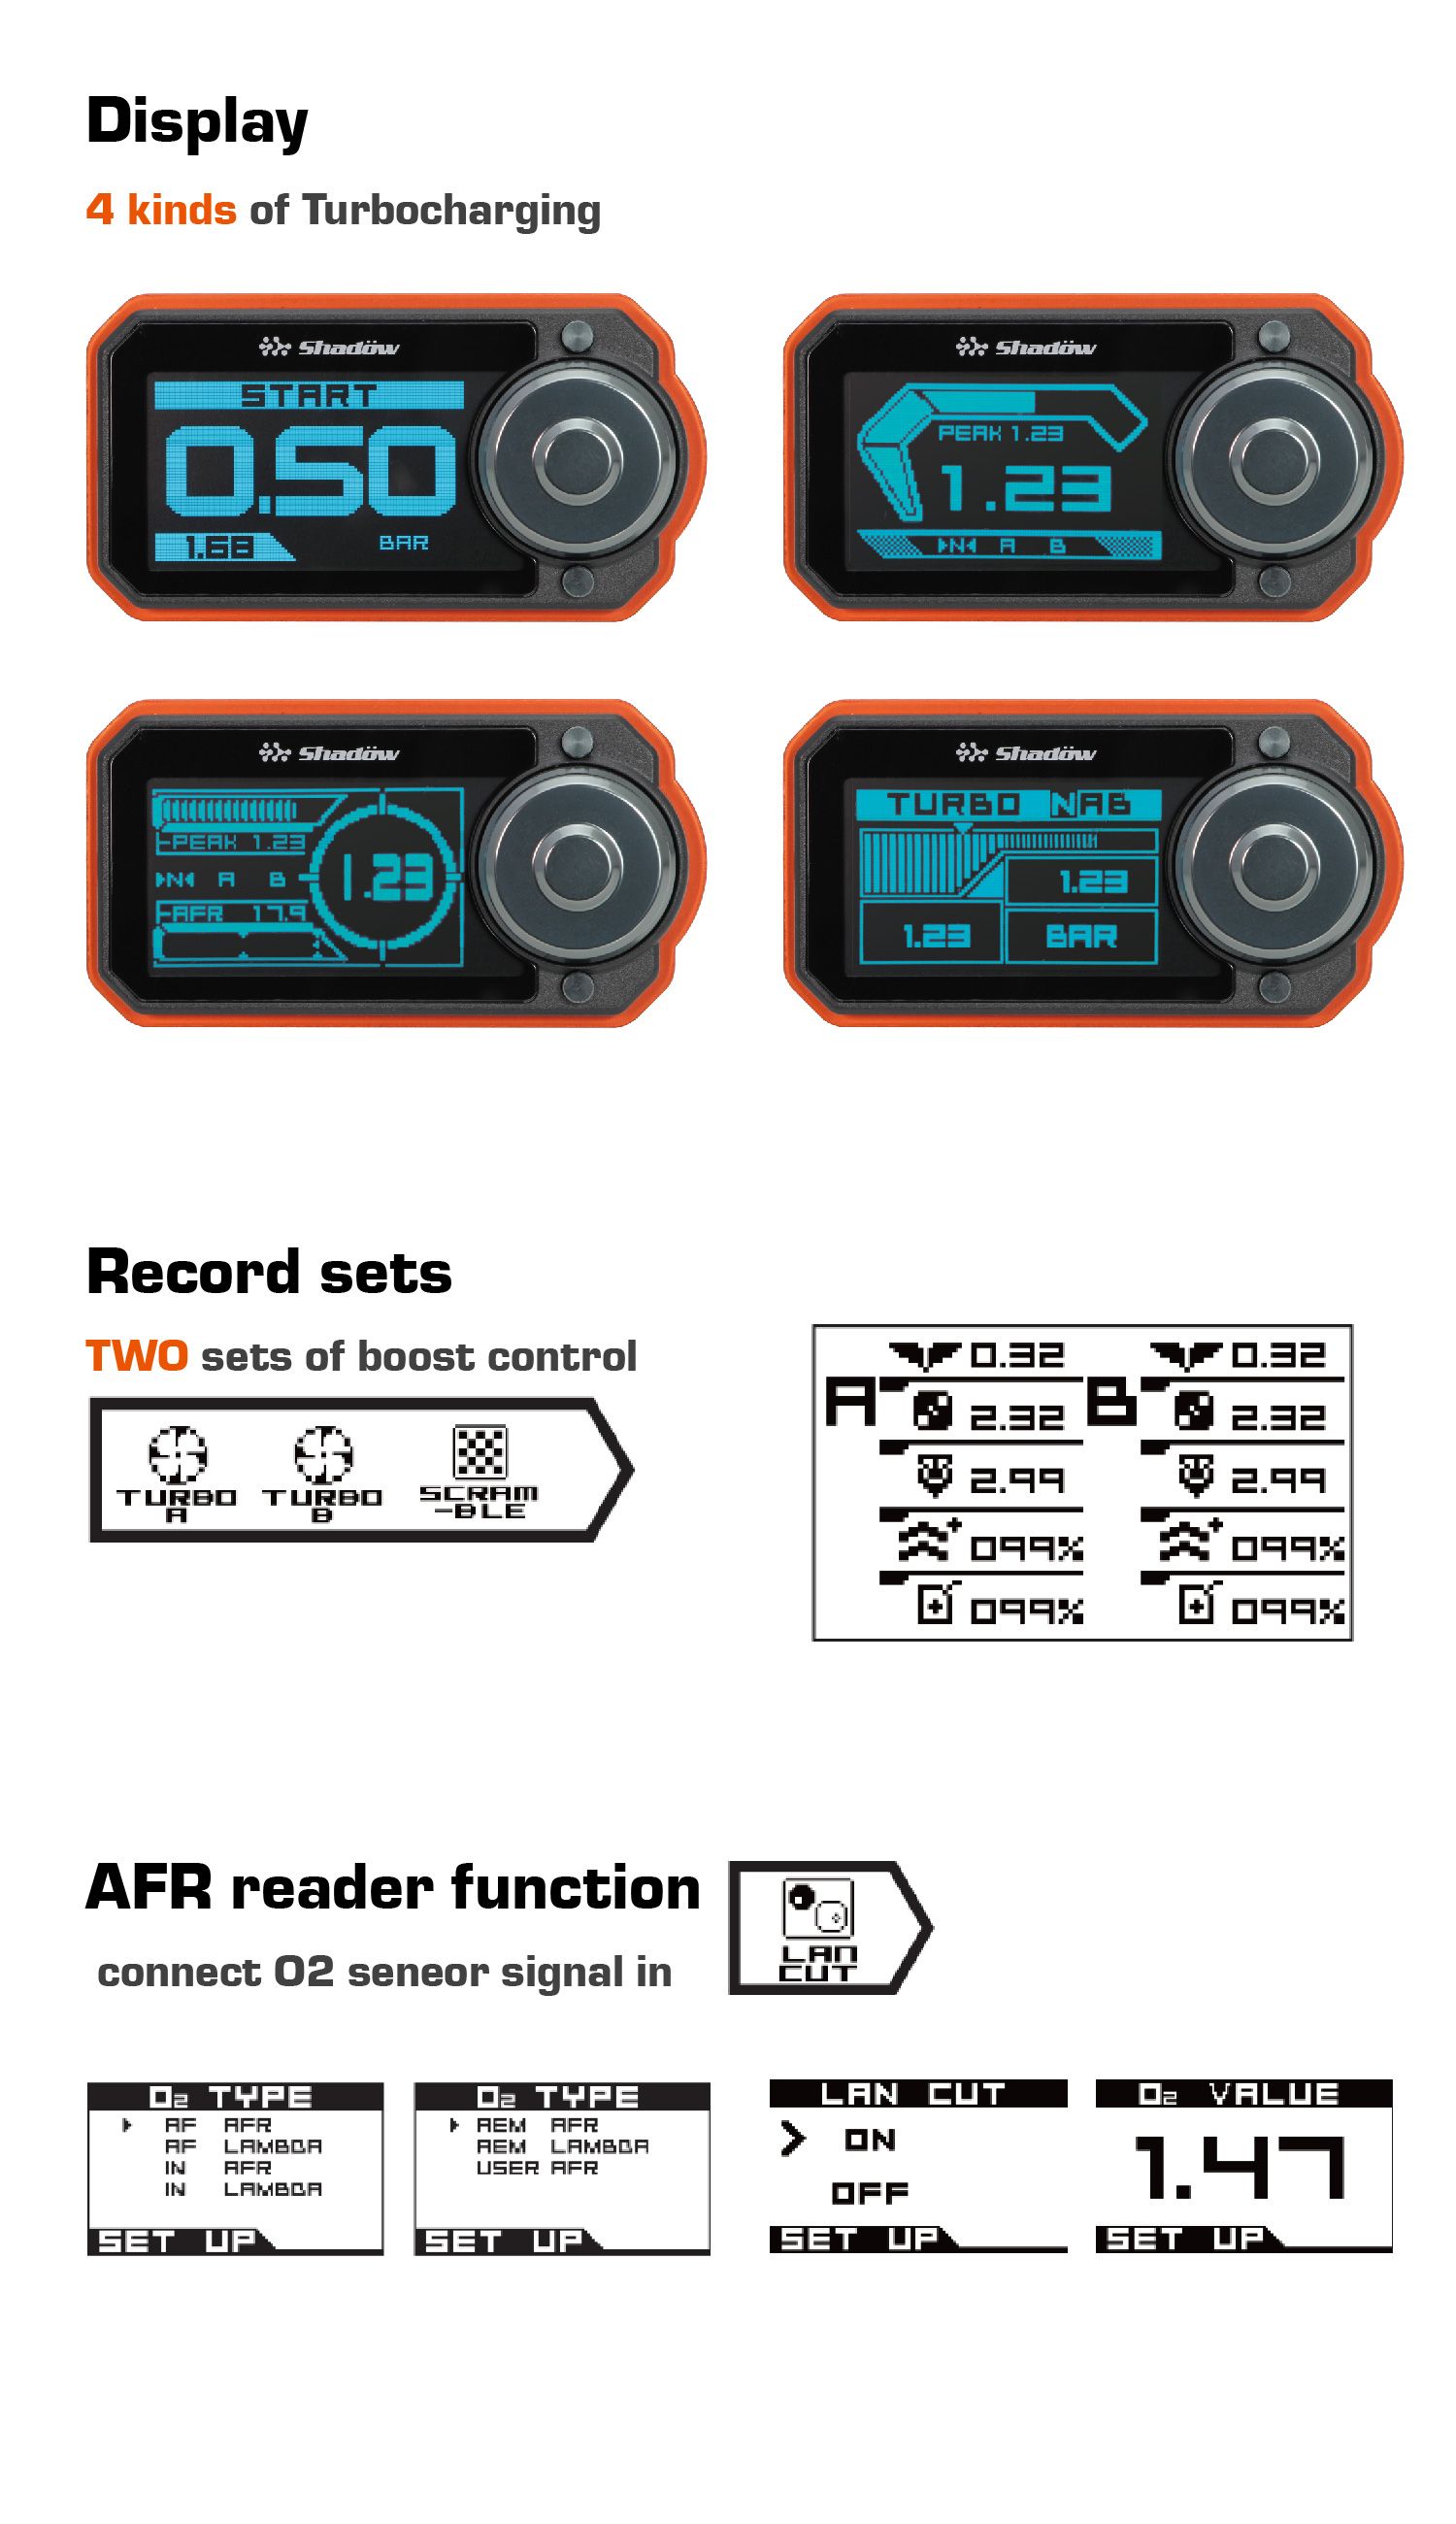 4 tipos de turbocargadores, DOS juegos de control de refuerzo, función de lector AFR.